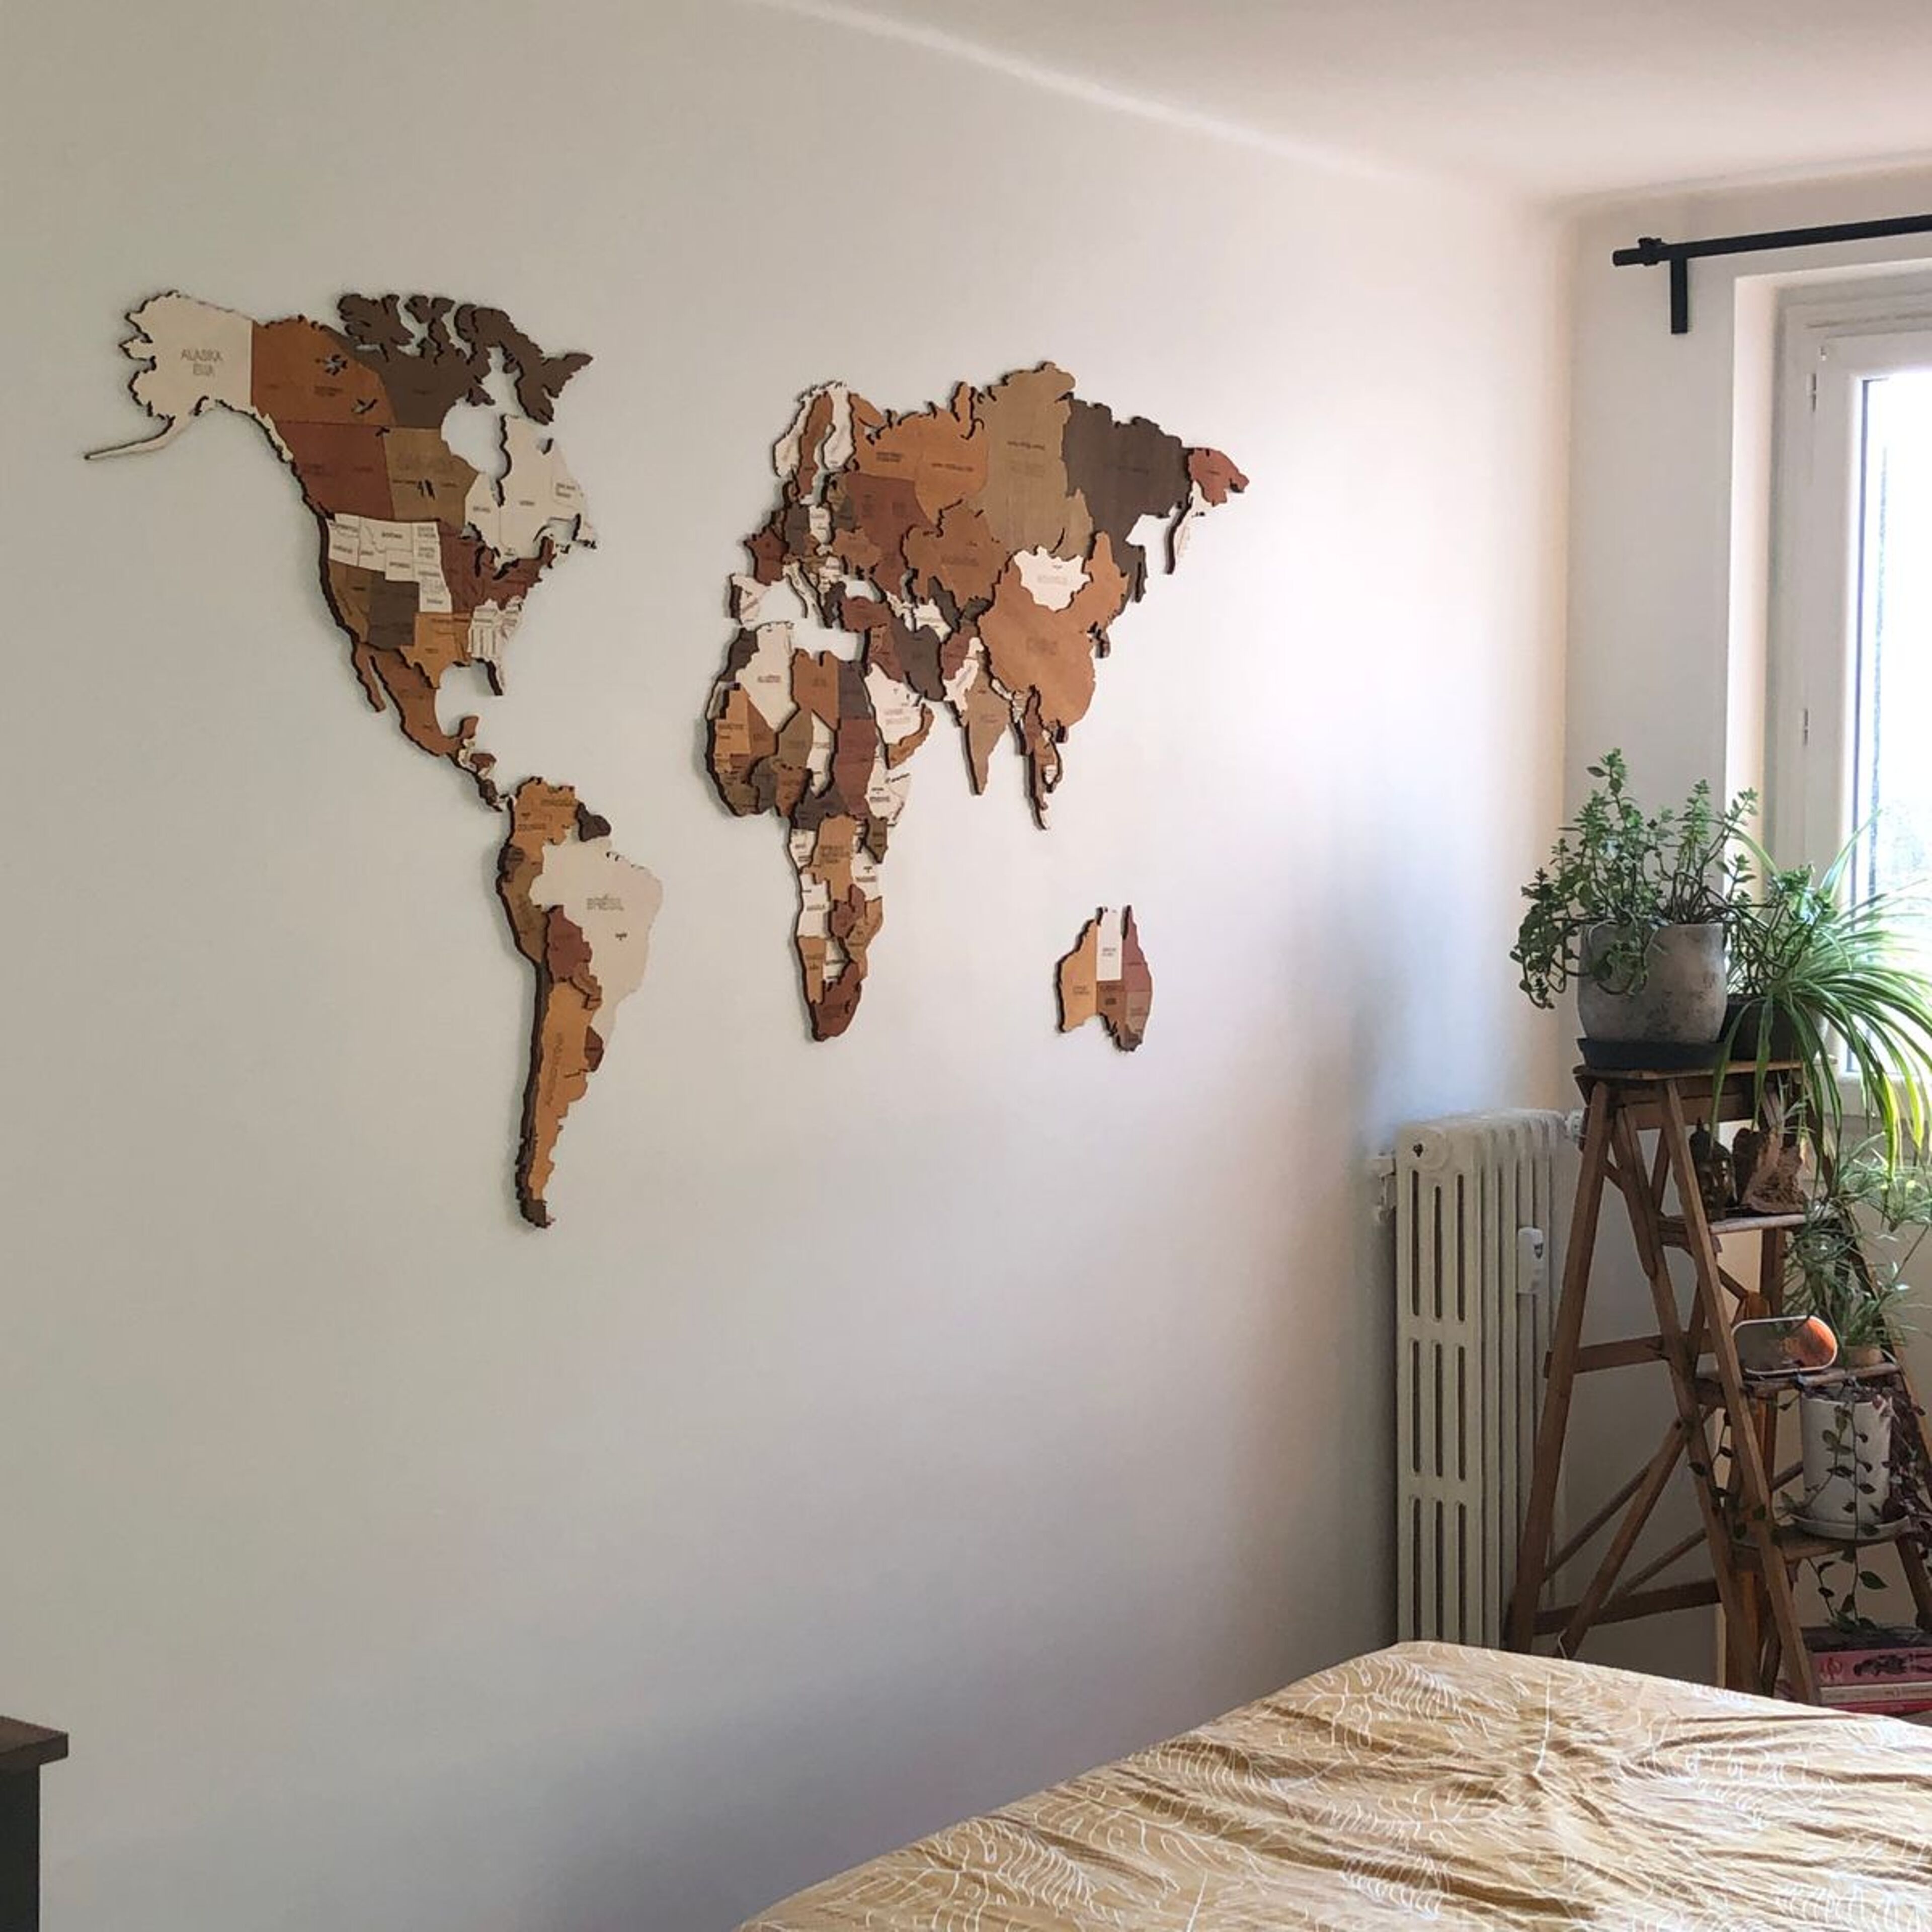 Reseña de Mapa del mundo de madera - imagen de Beily Ko